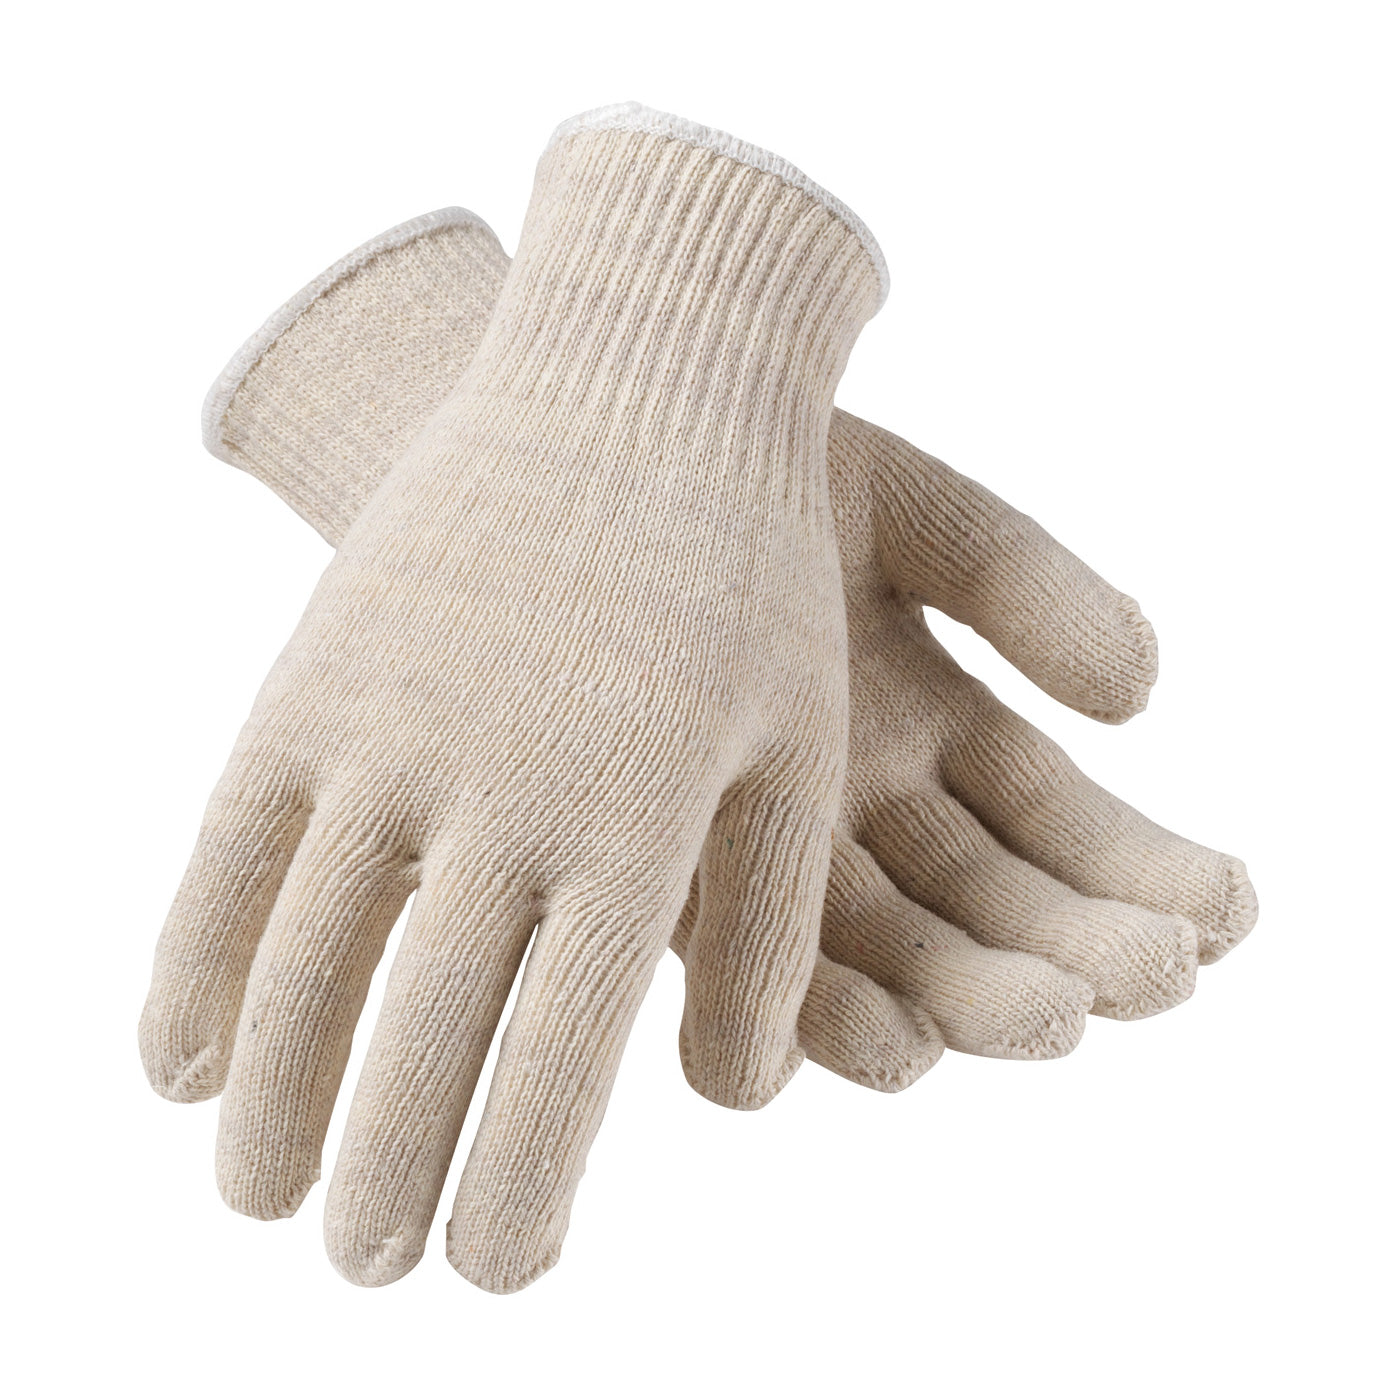 PIP 35-C2110/L Medium Weight Seamless Knit Cotton/Polyester Glove - 10 Gauge Natural